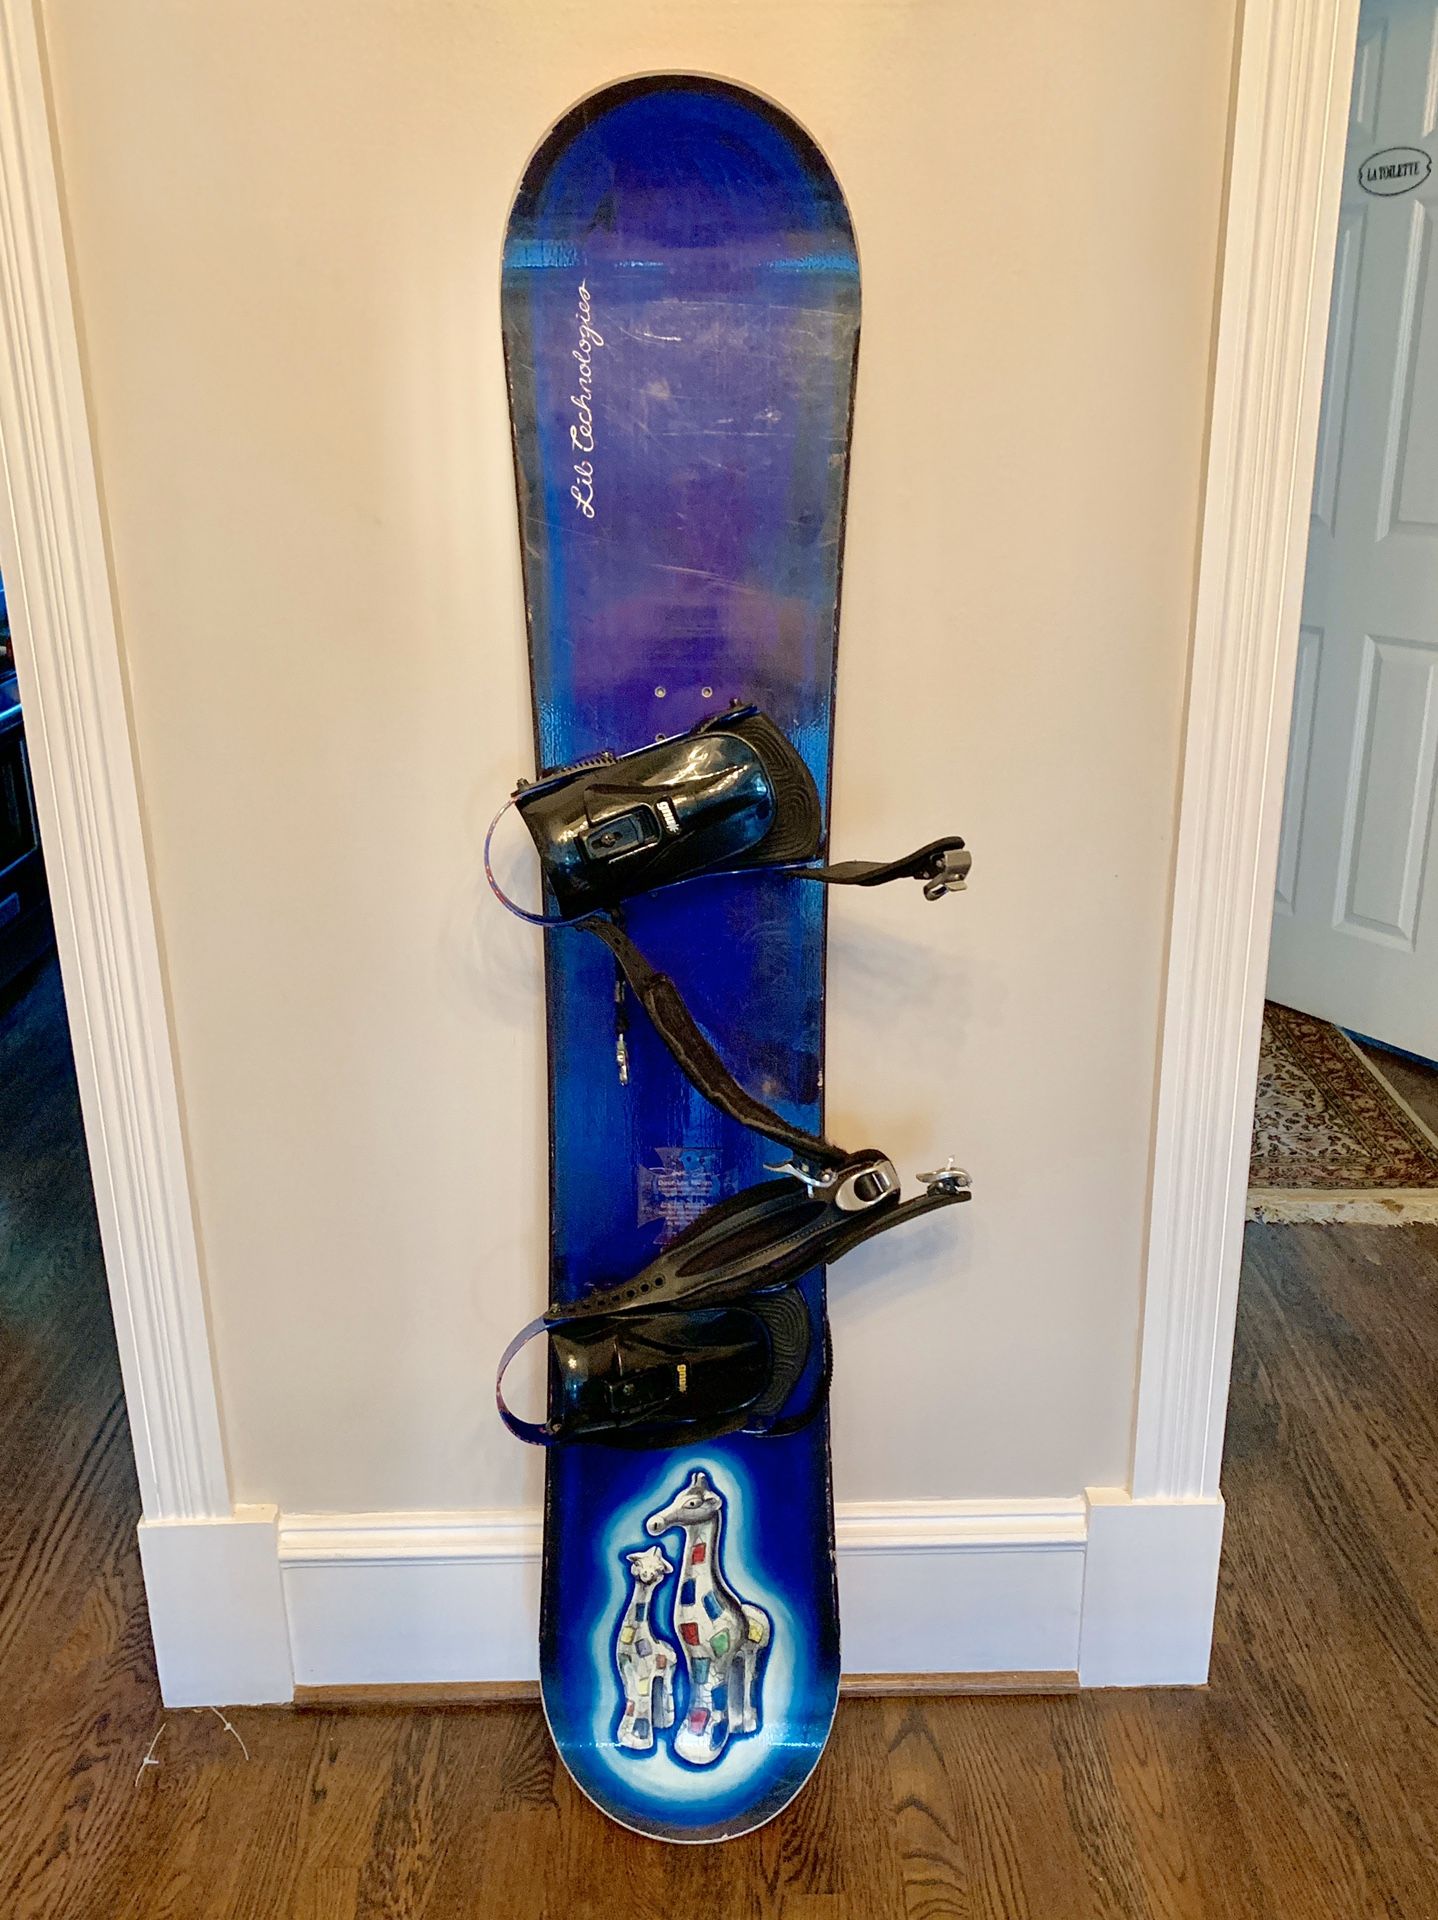 162 cm Dave Lee Lib Technology snowboard, bindings and bag